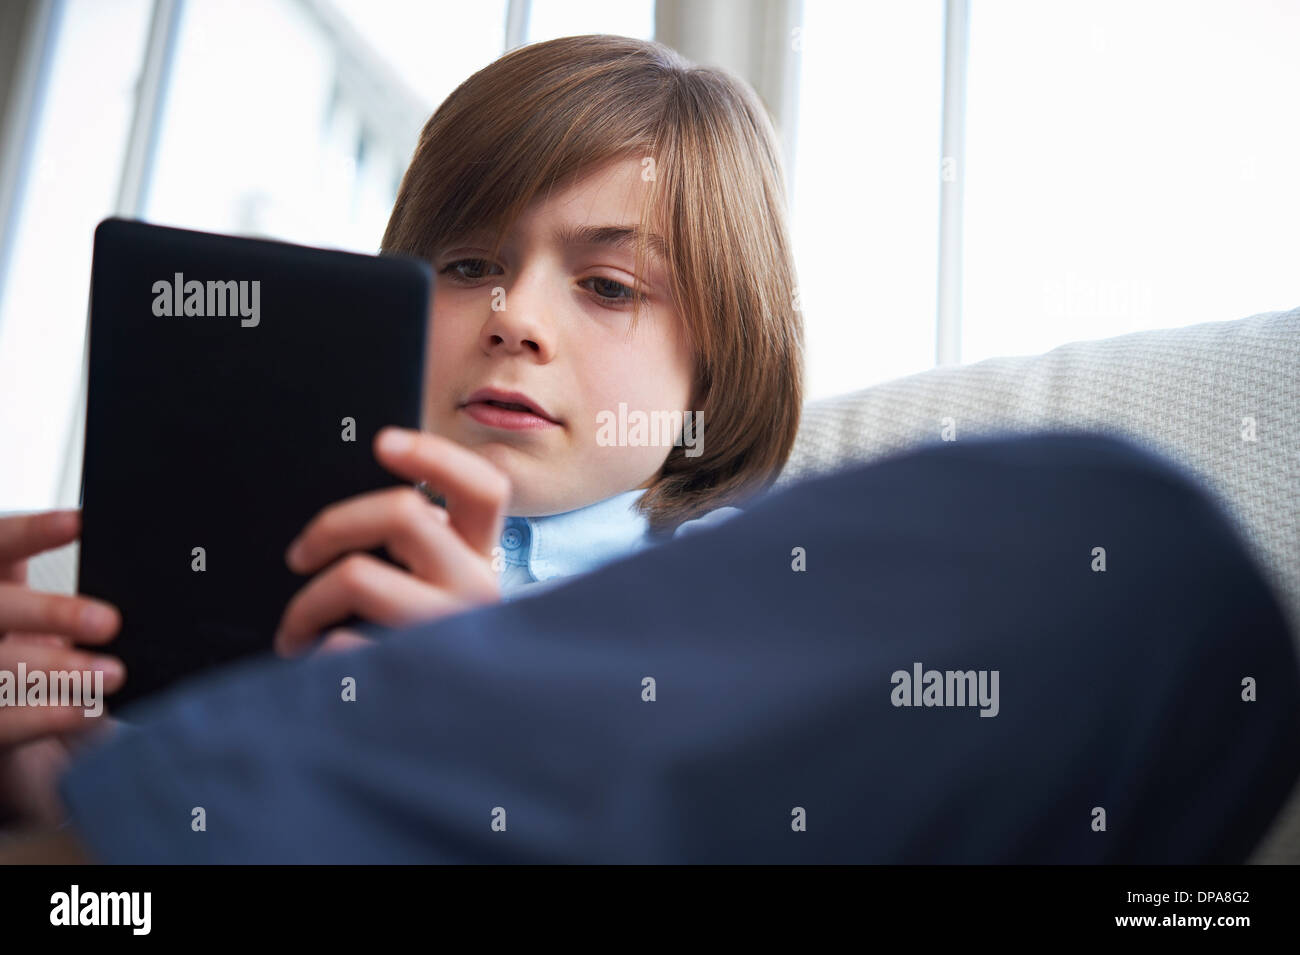 Boy on sofa using digital tablet Stock Photo